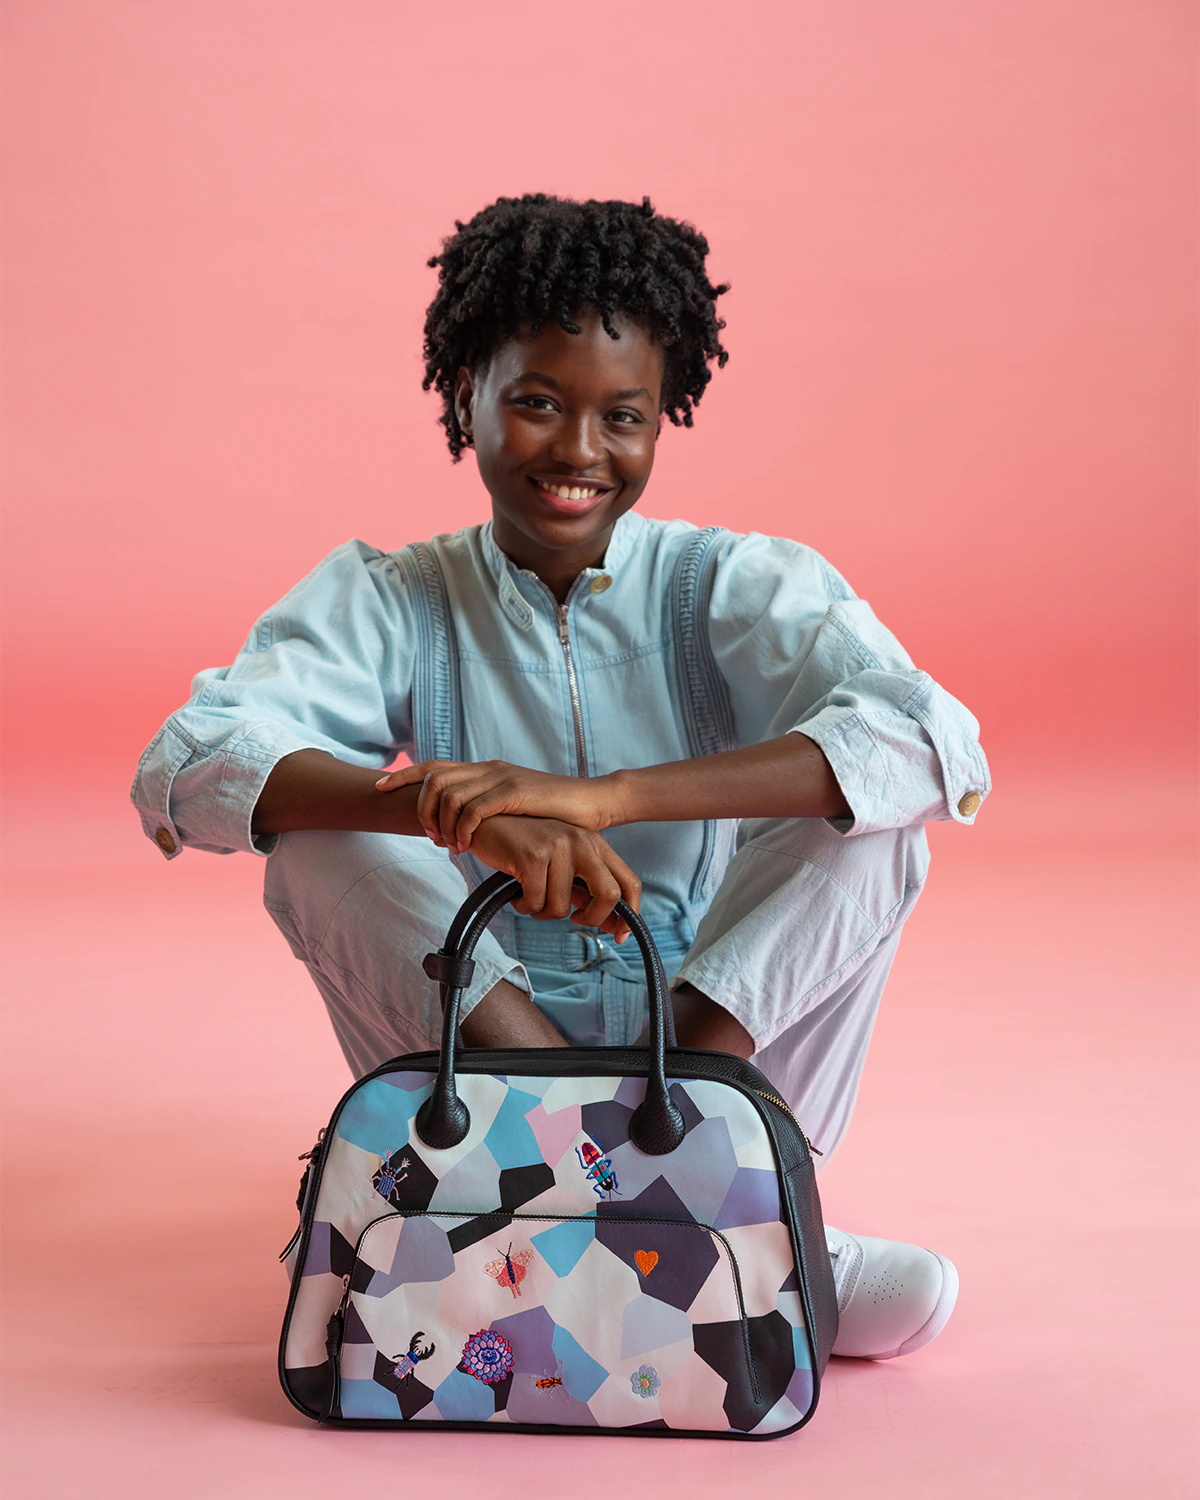 New Designs Of Ladies Handbags 2021//Beautiful Designer Handbag for girl  /women//handbags and purses - YouTube